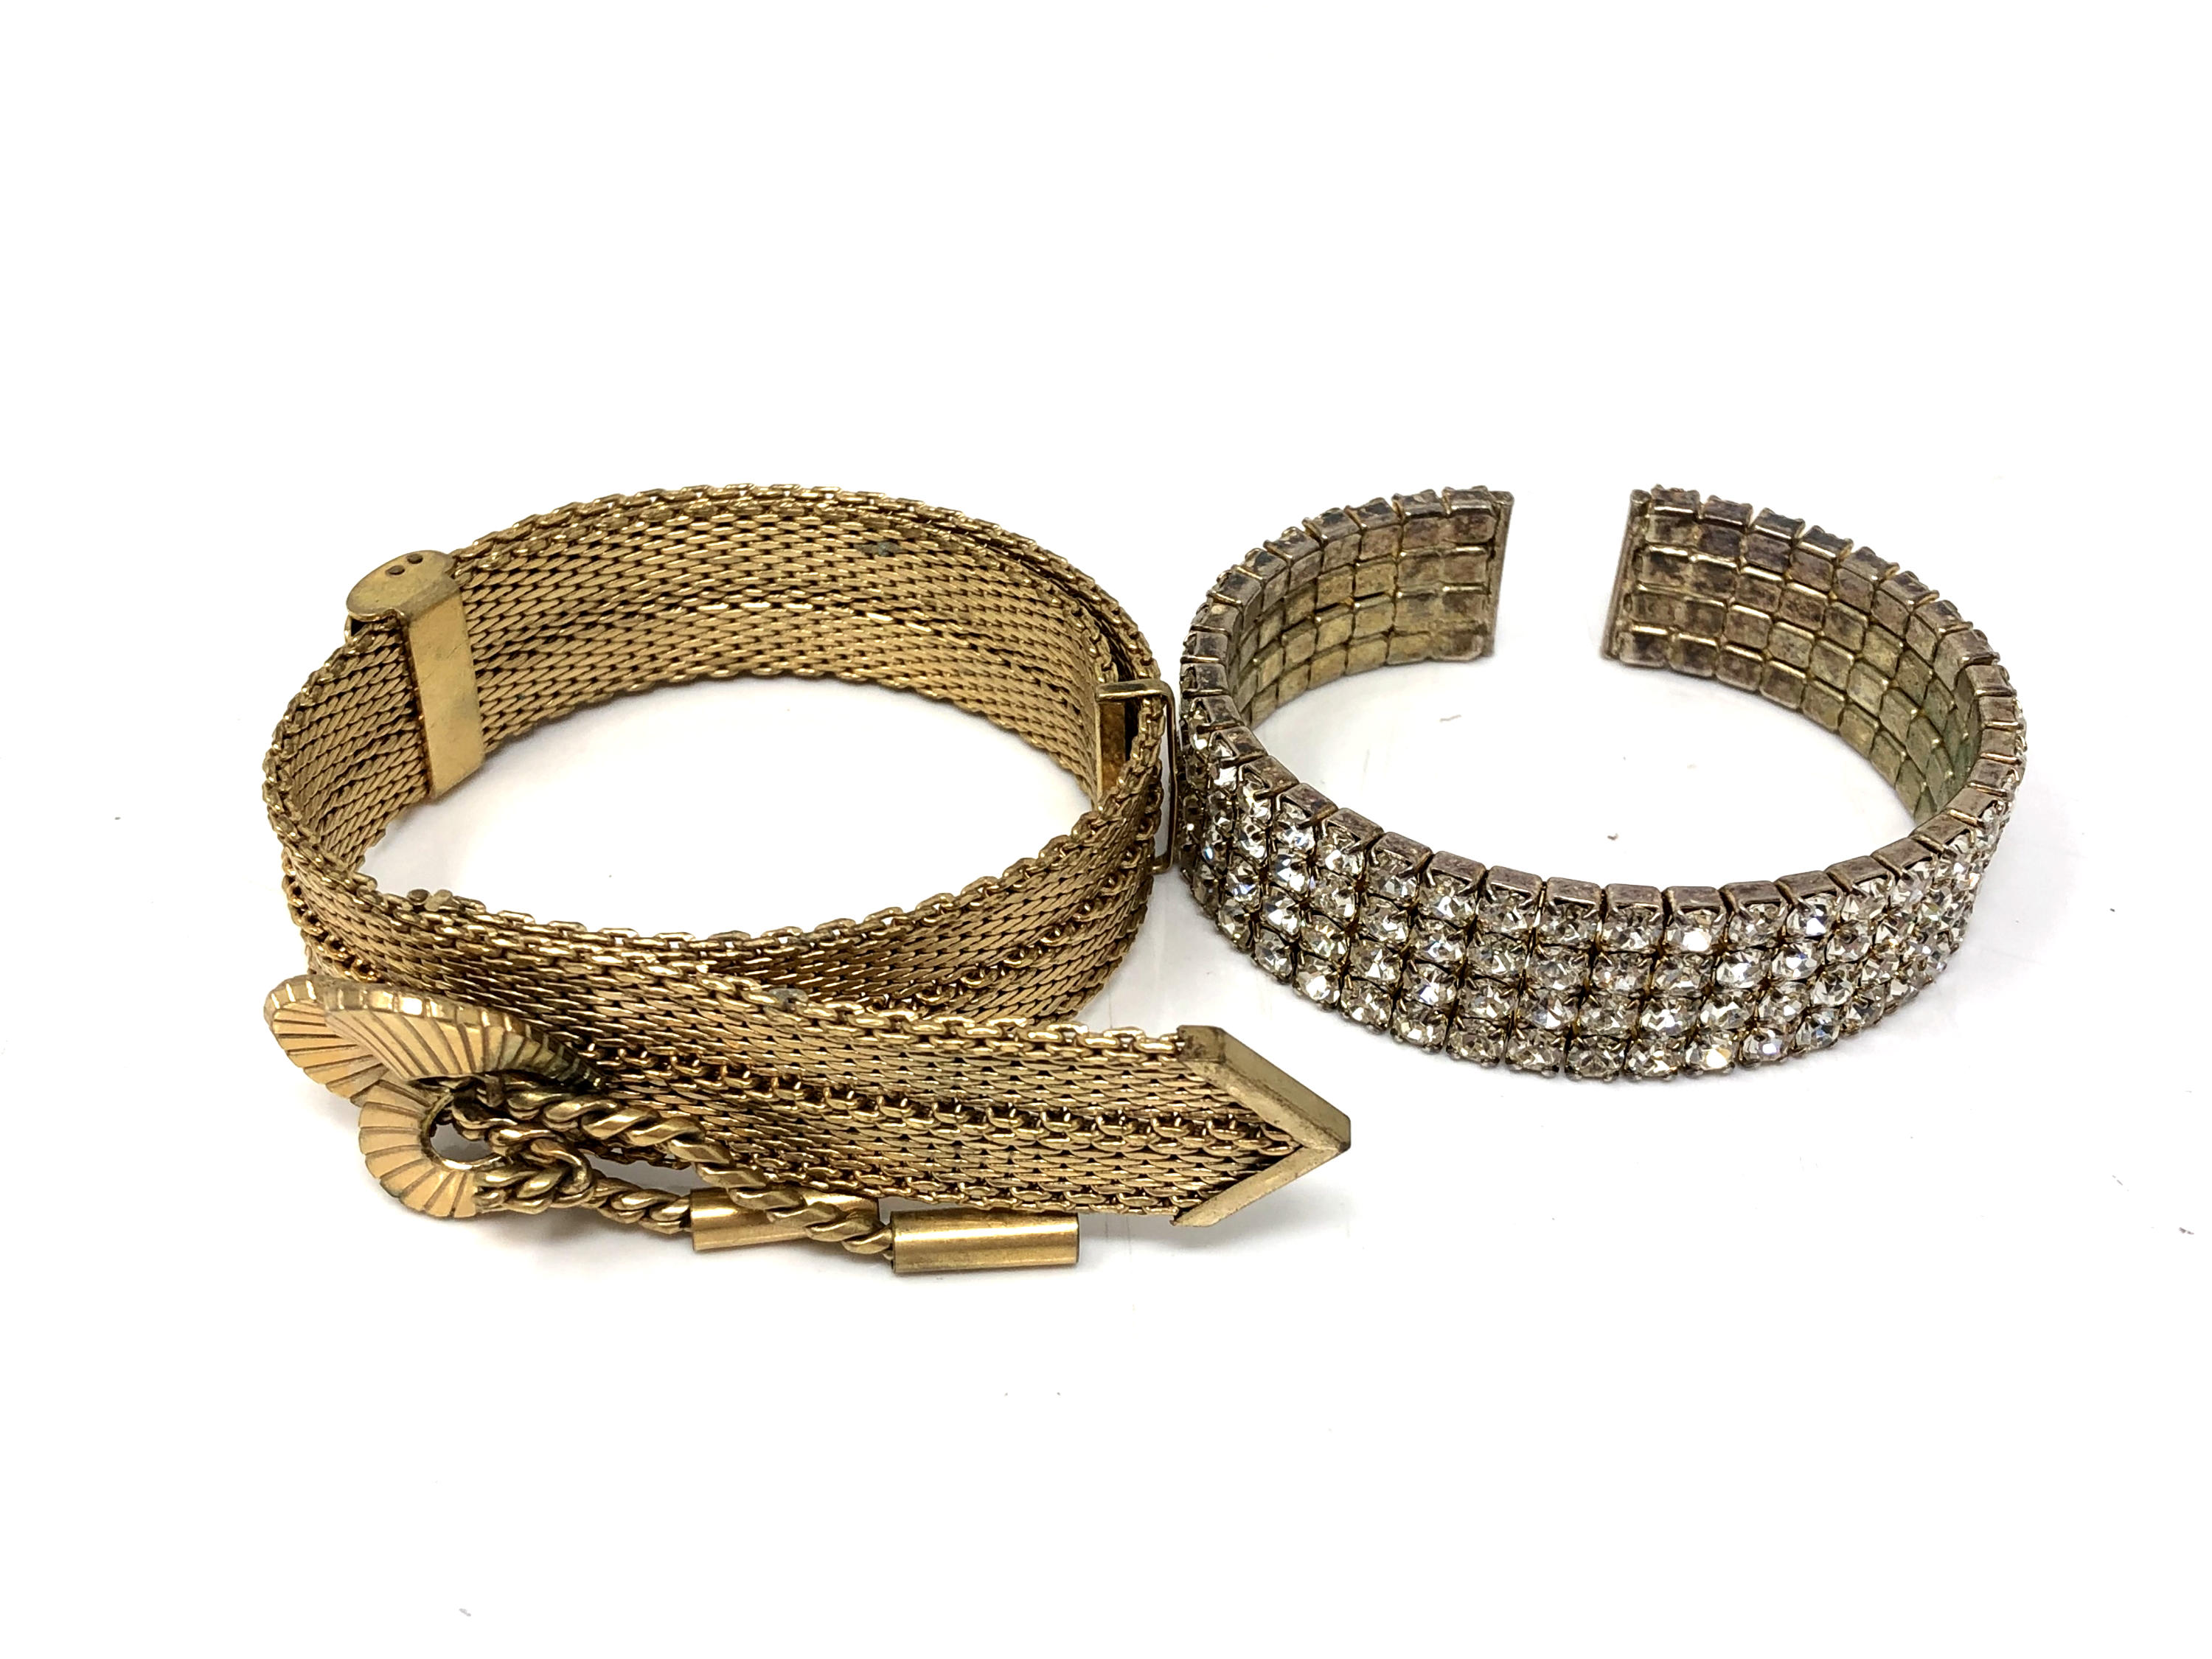 A gold plated bracelet and cuff bracelet